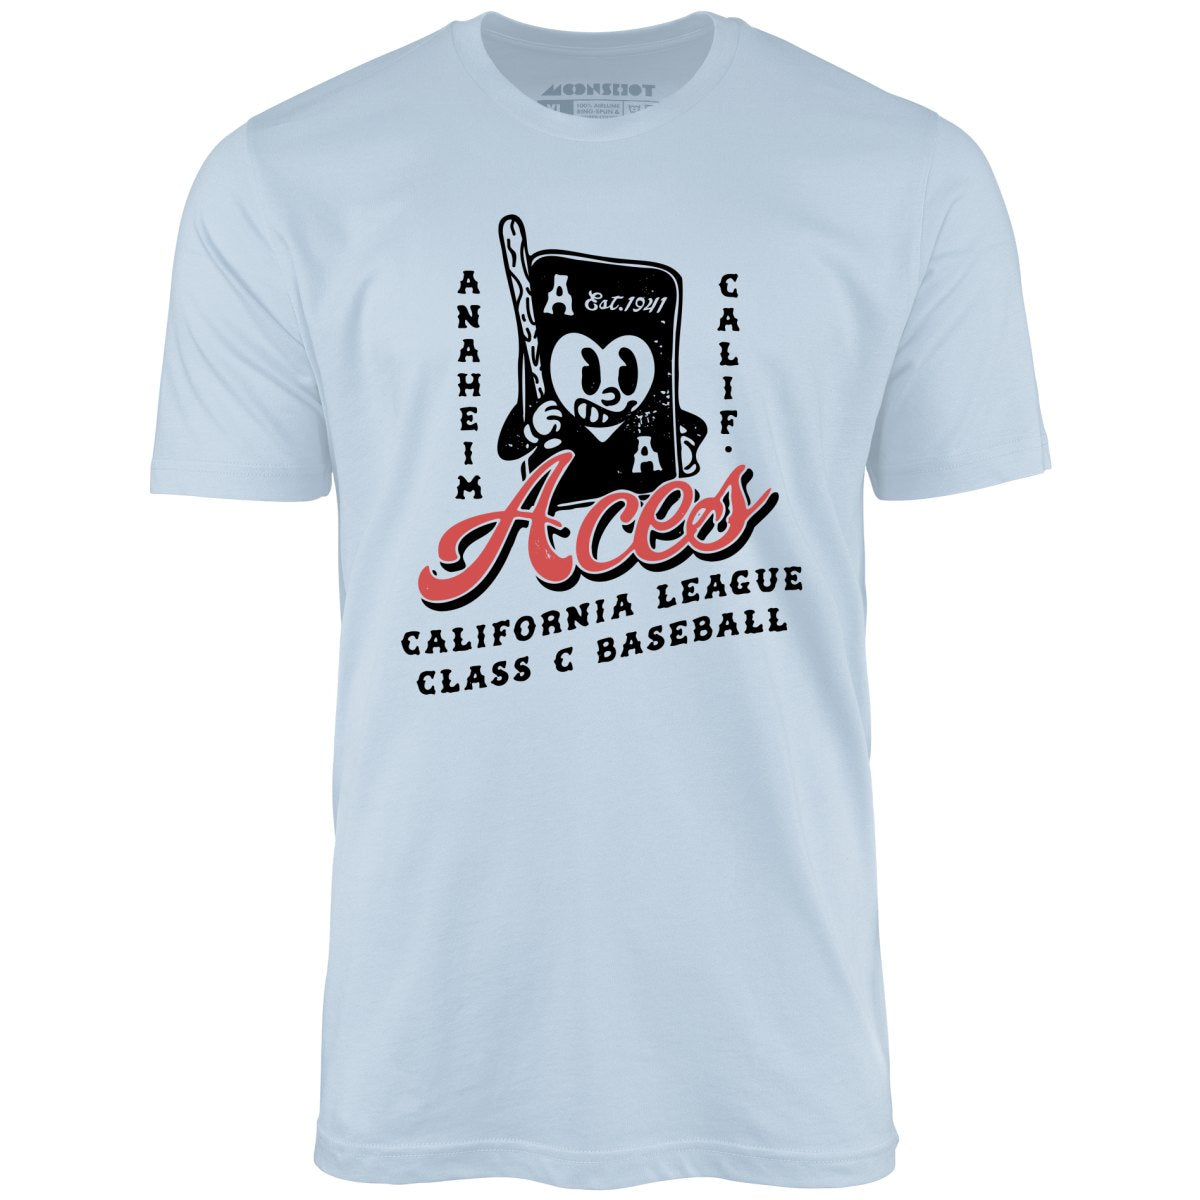 Anaheim Aces - California - Vintage Defunct Baseball Teams - Unisex T-Shirt